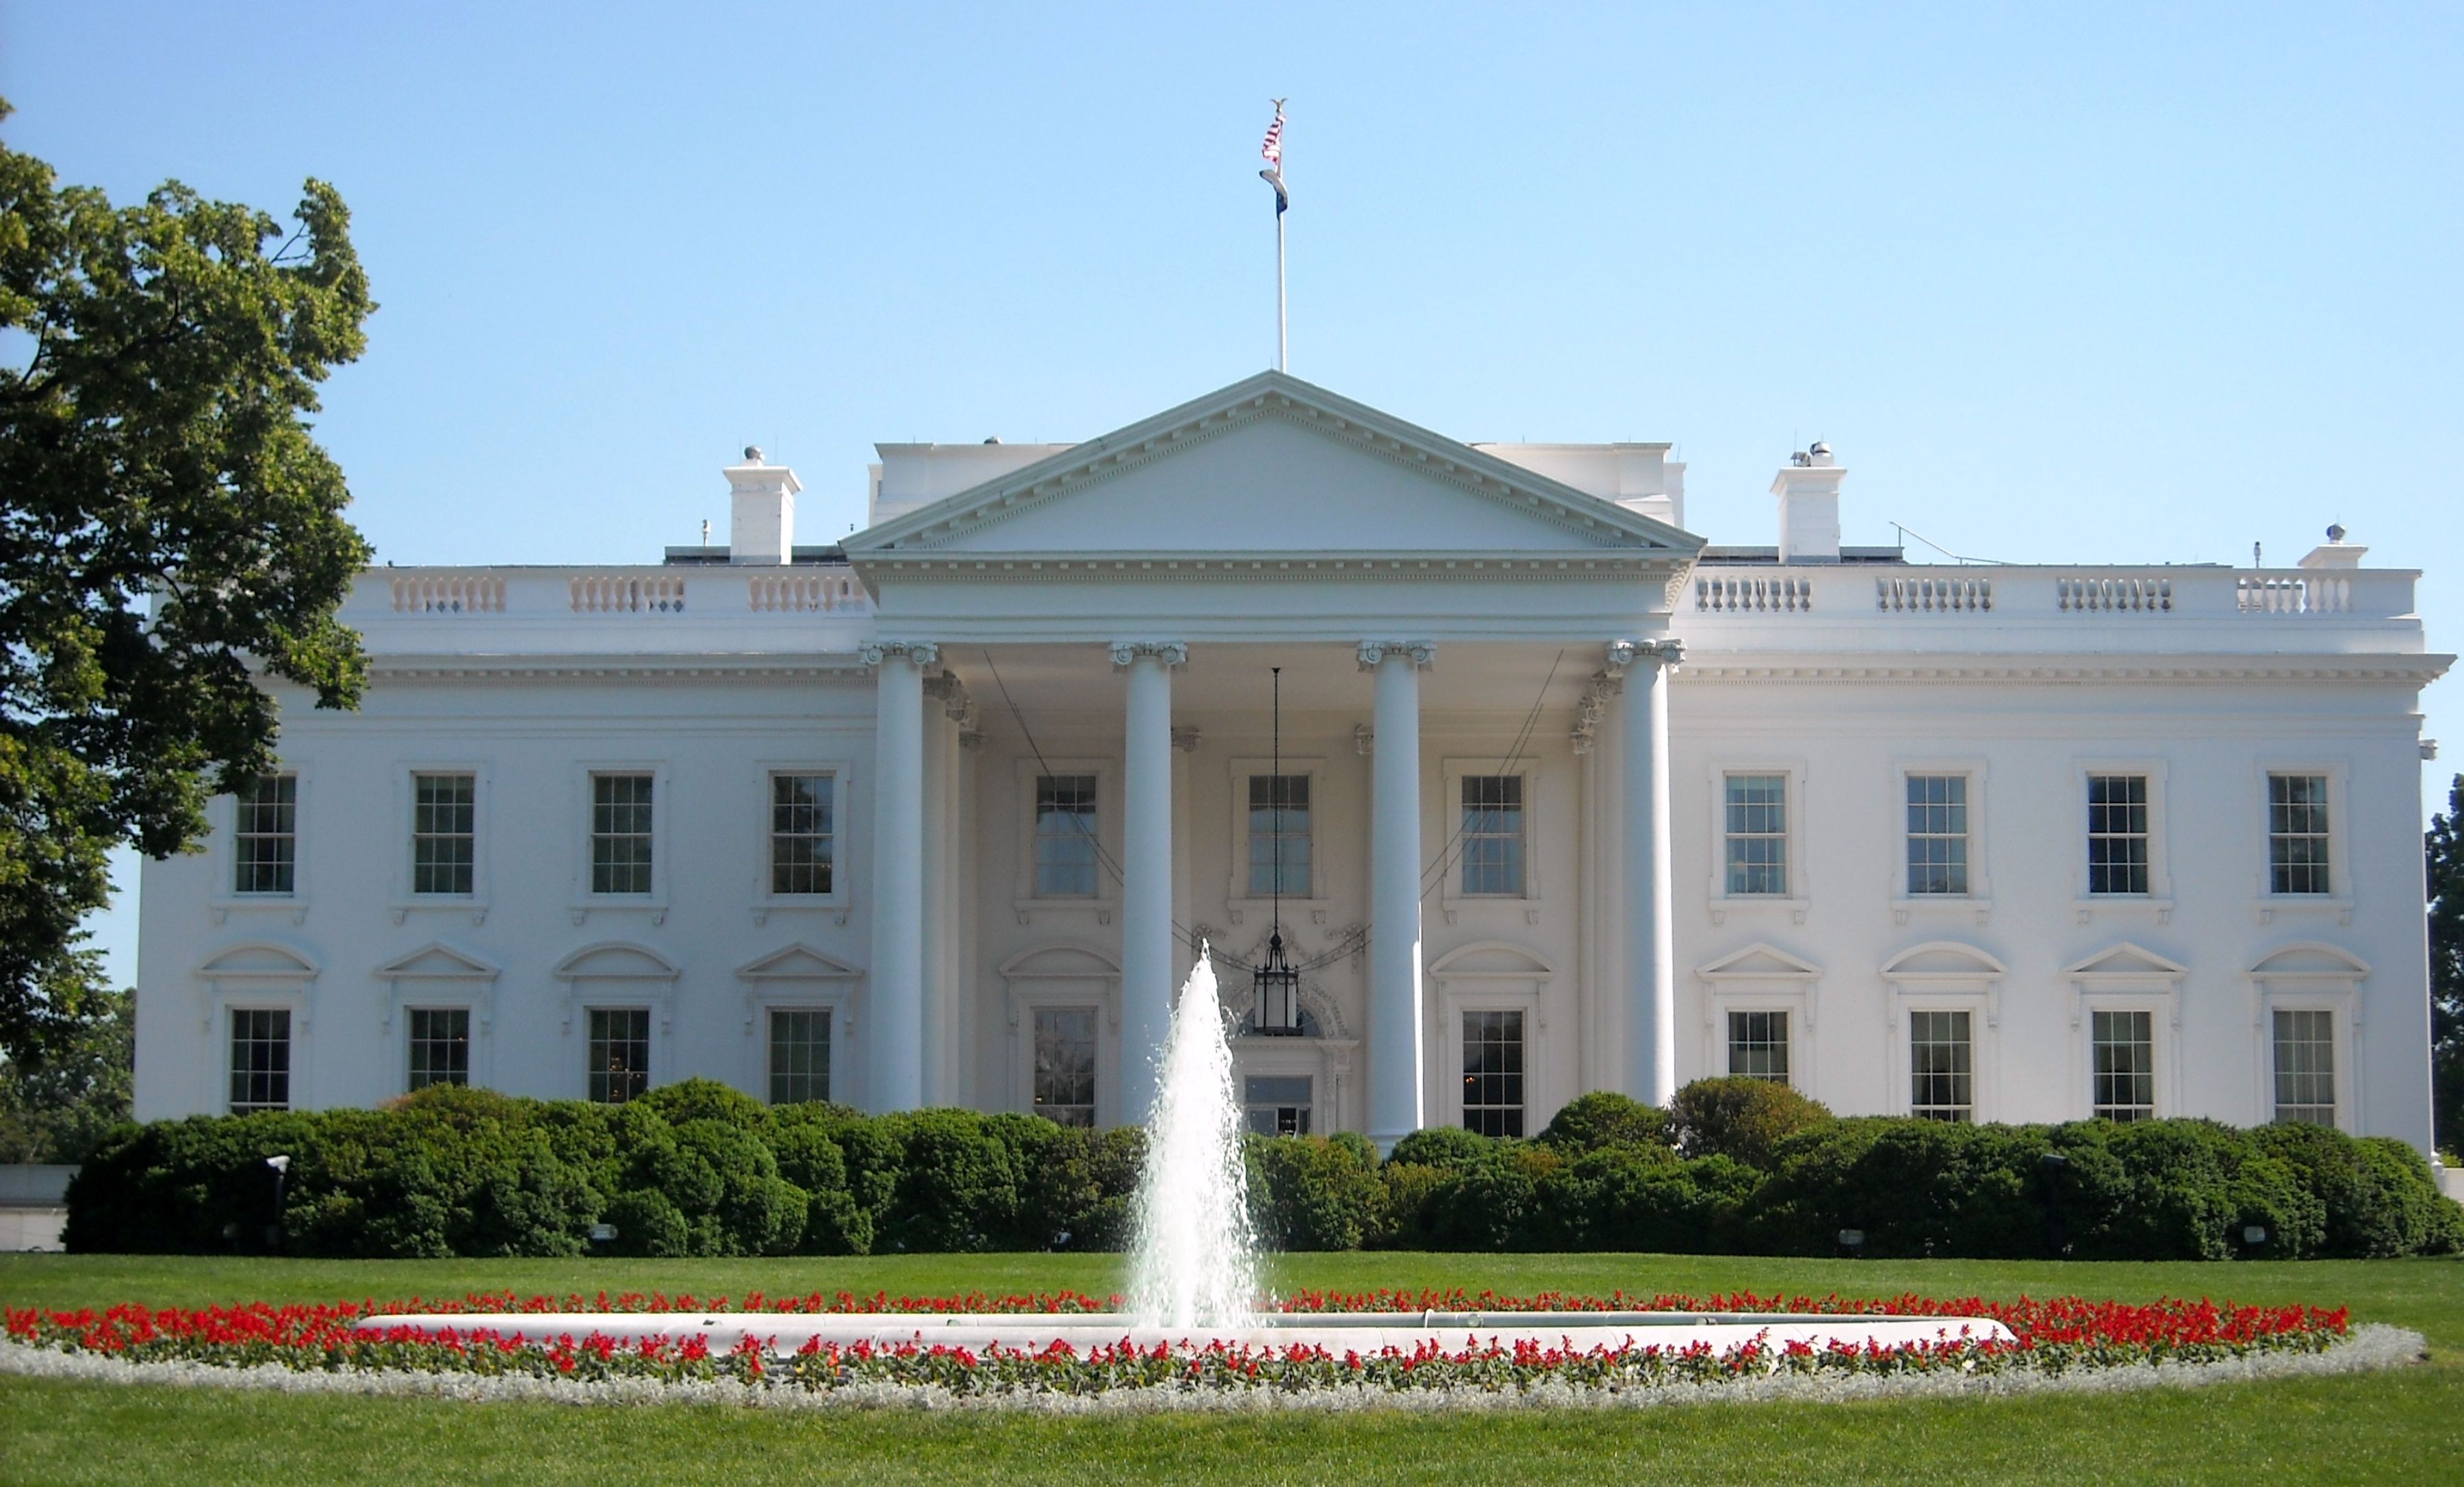 Exploring The White House